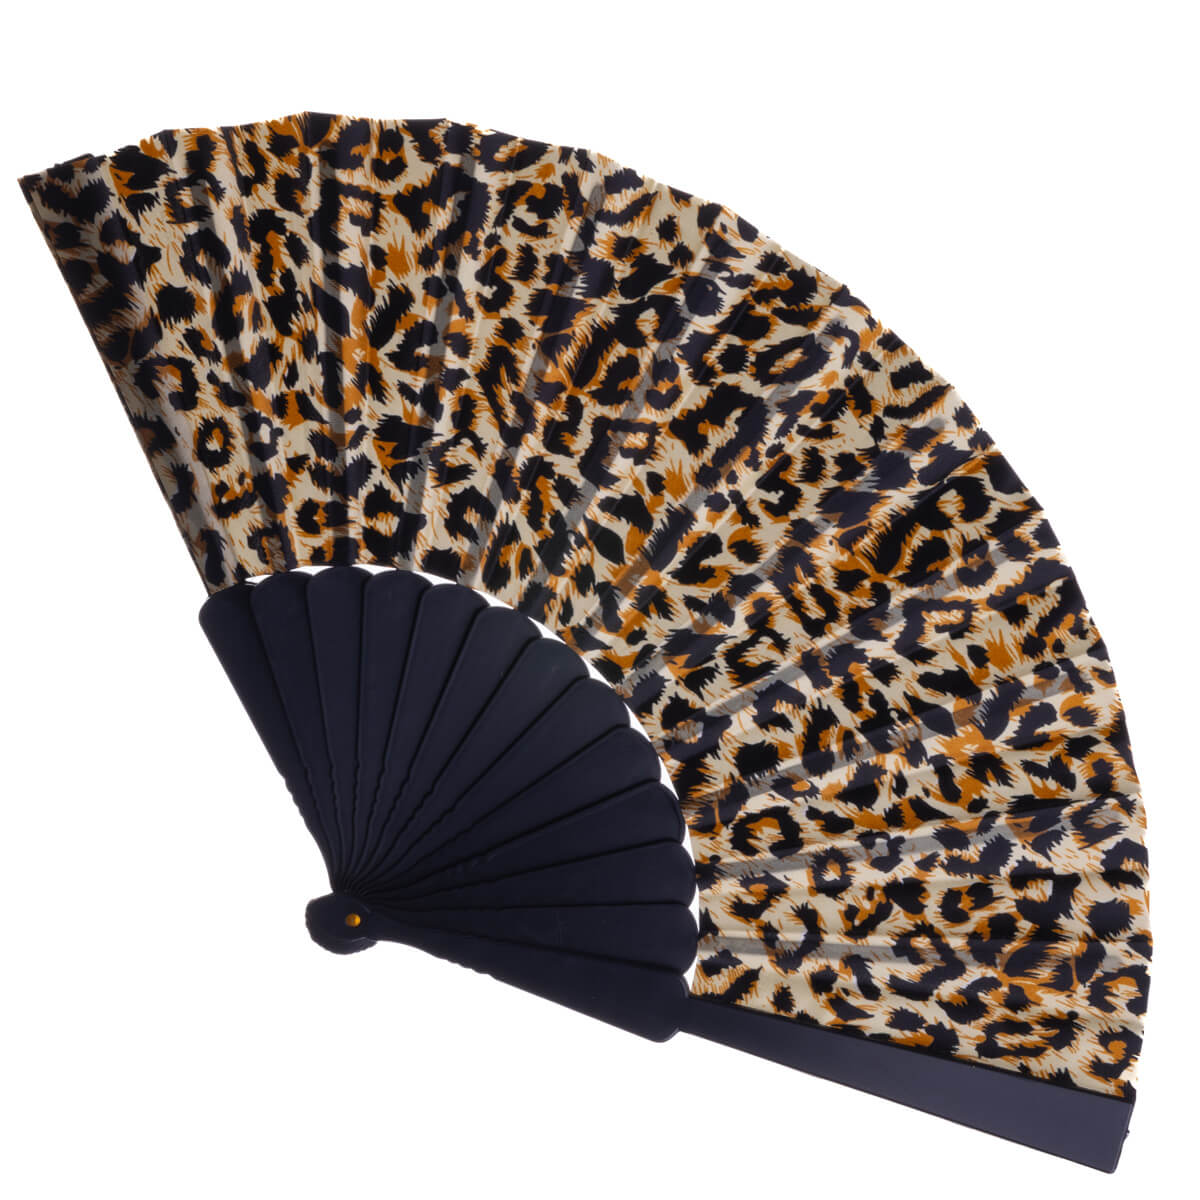 Plastic fan with leopard fabric